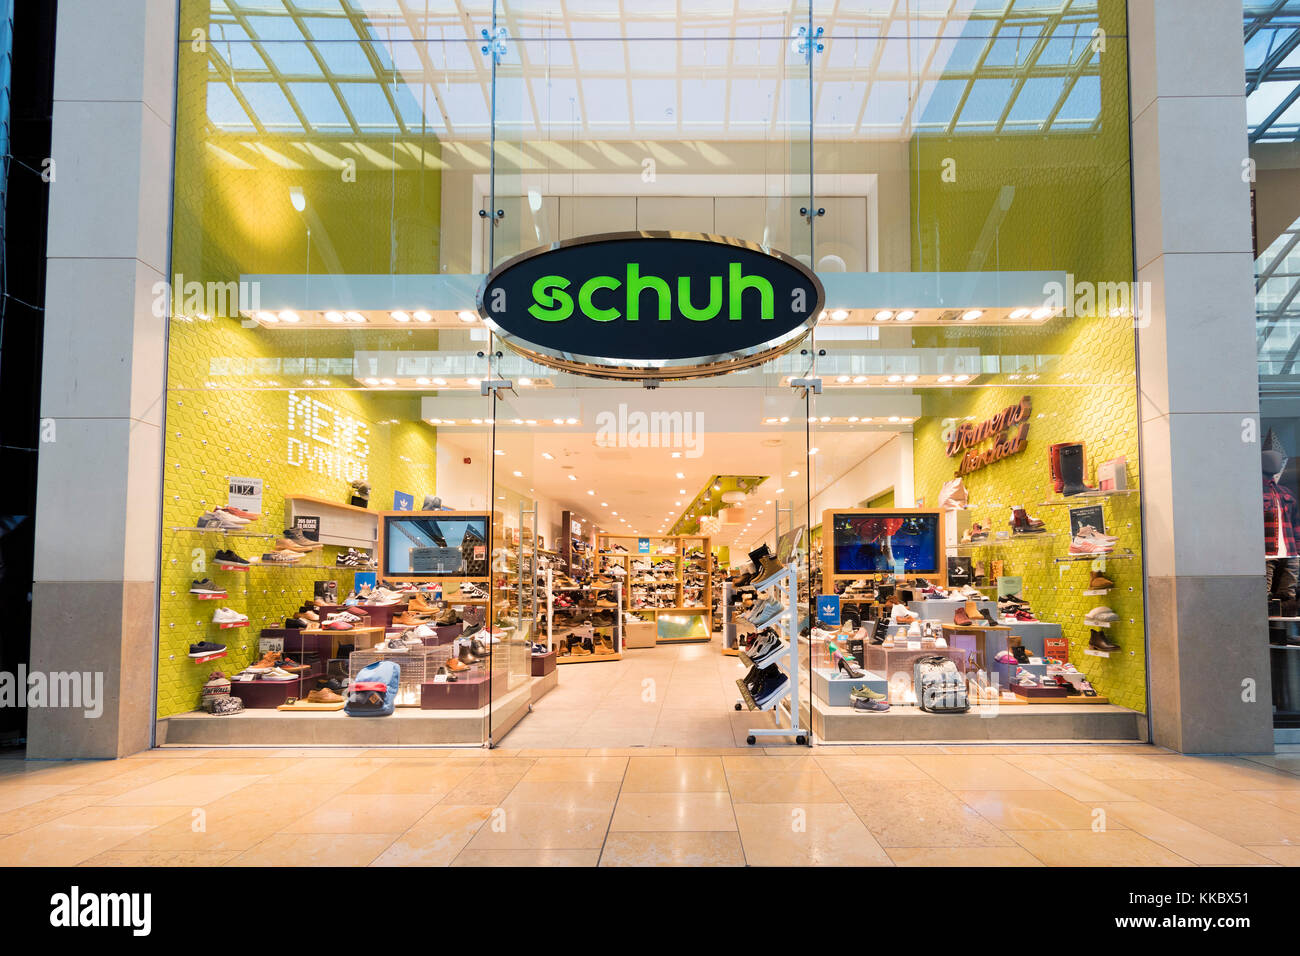 Schuh shoe store, UK. Stock Photo